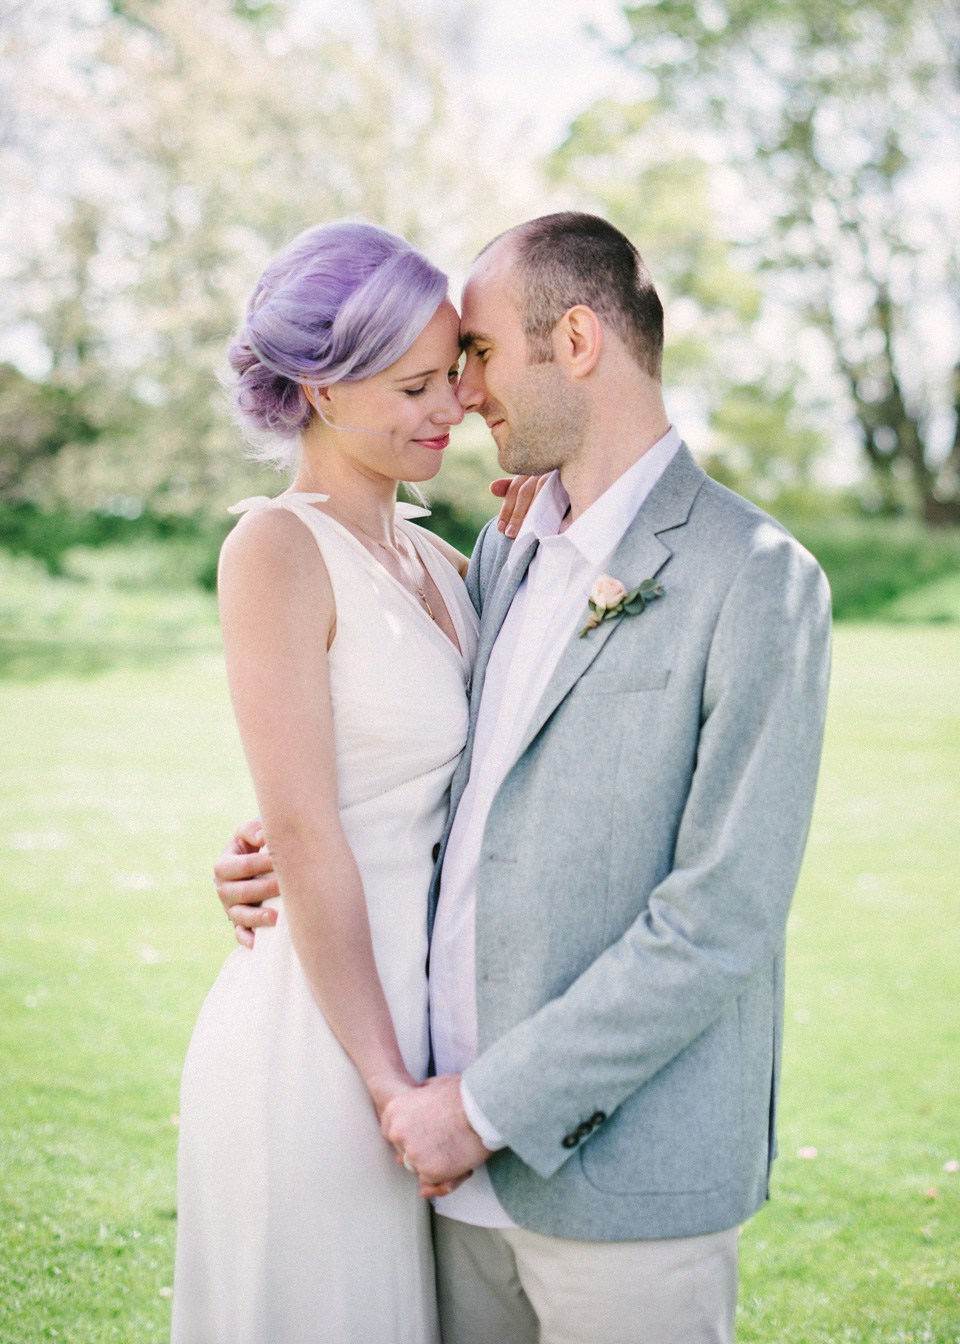 wpid377772-lilac-hair-pastel-flowers-intimage-vintage-inspired-spring-pub-wedding-18